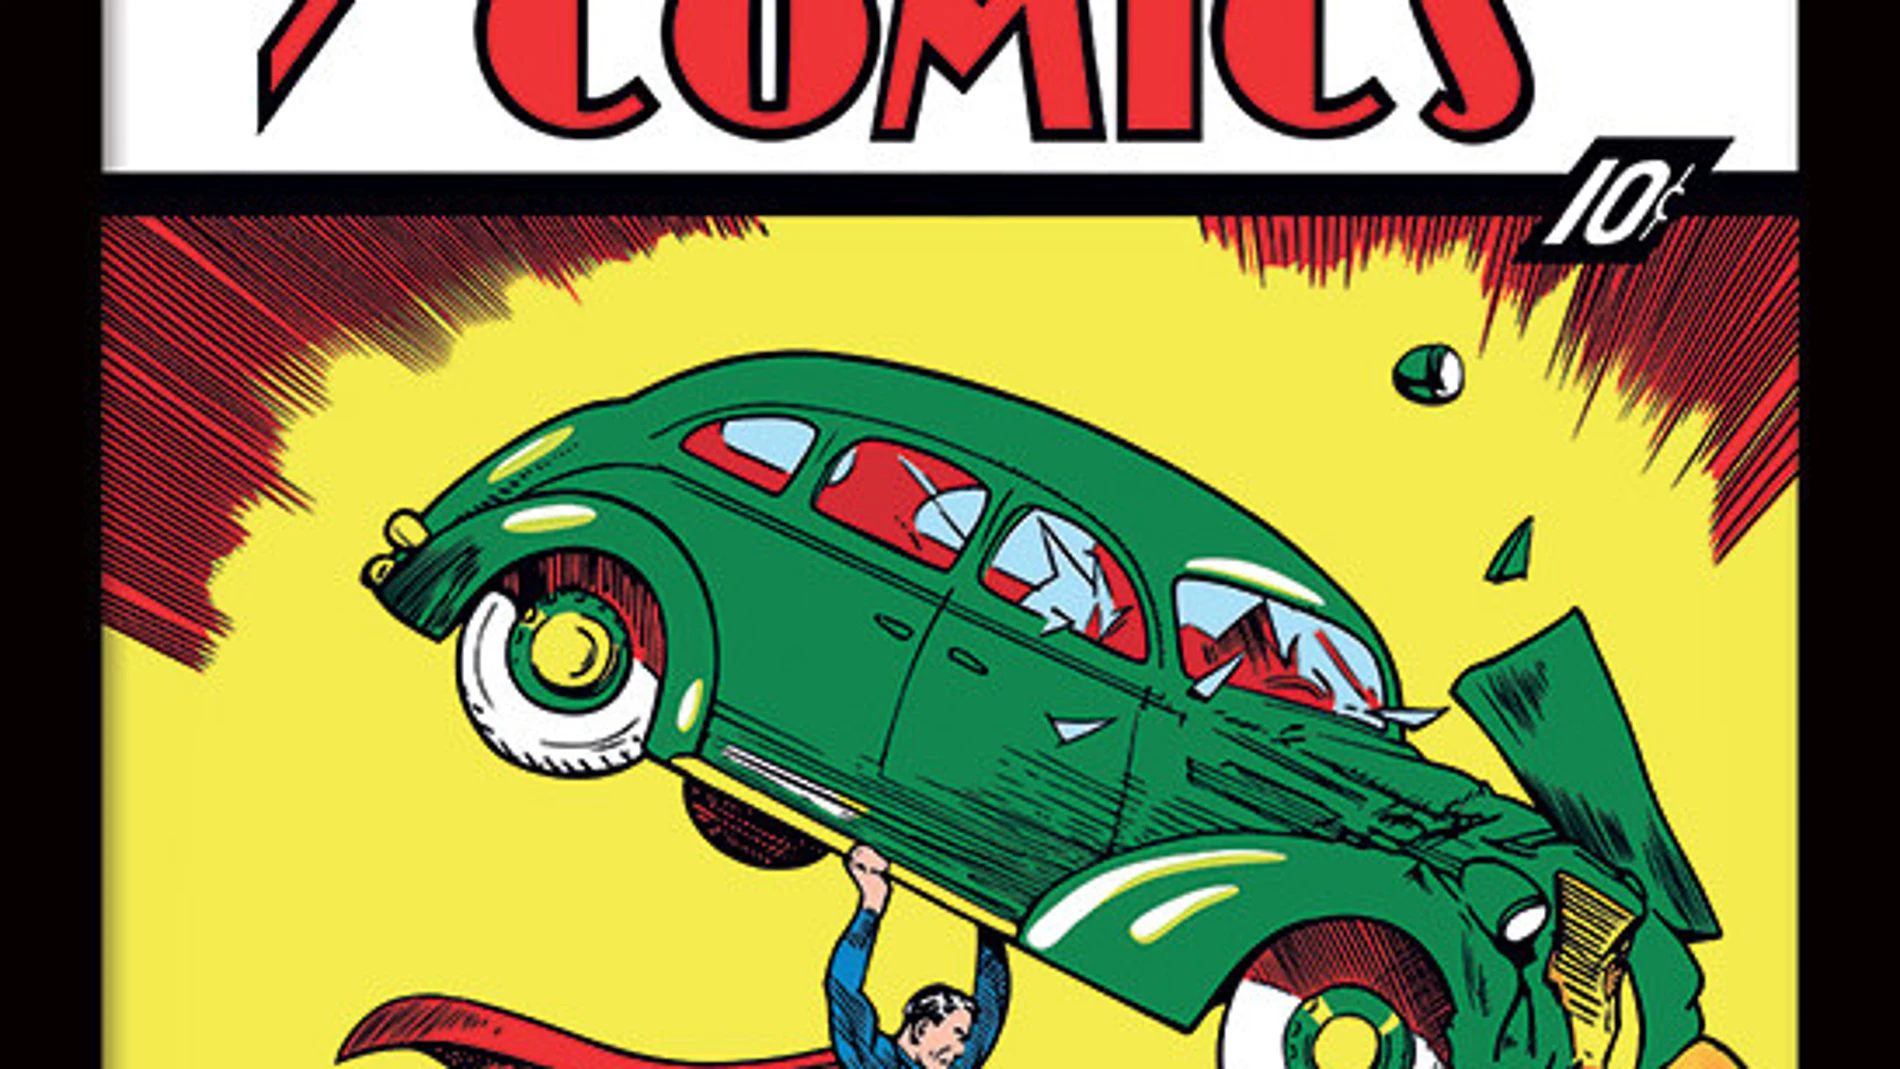 Portada del primer número de "Action Comics", donde se presenta por primera vez al personaje de Superman | Fuente: DC Comics